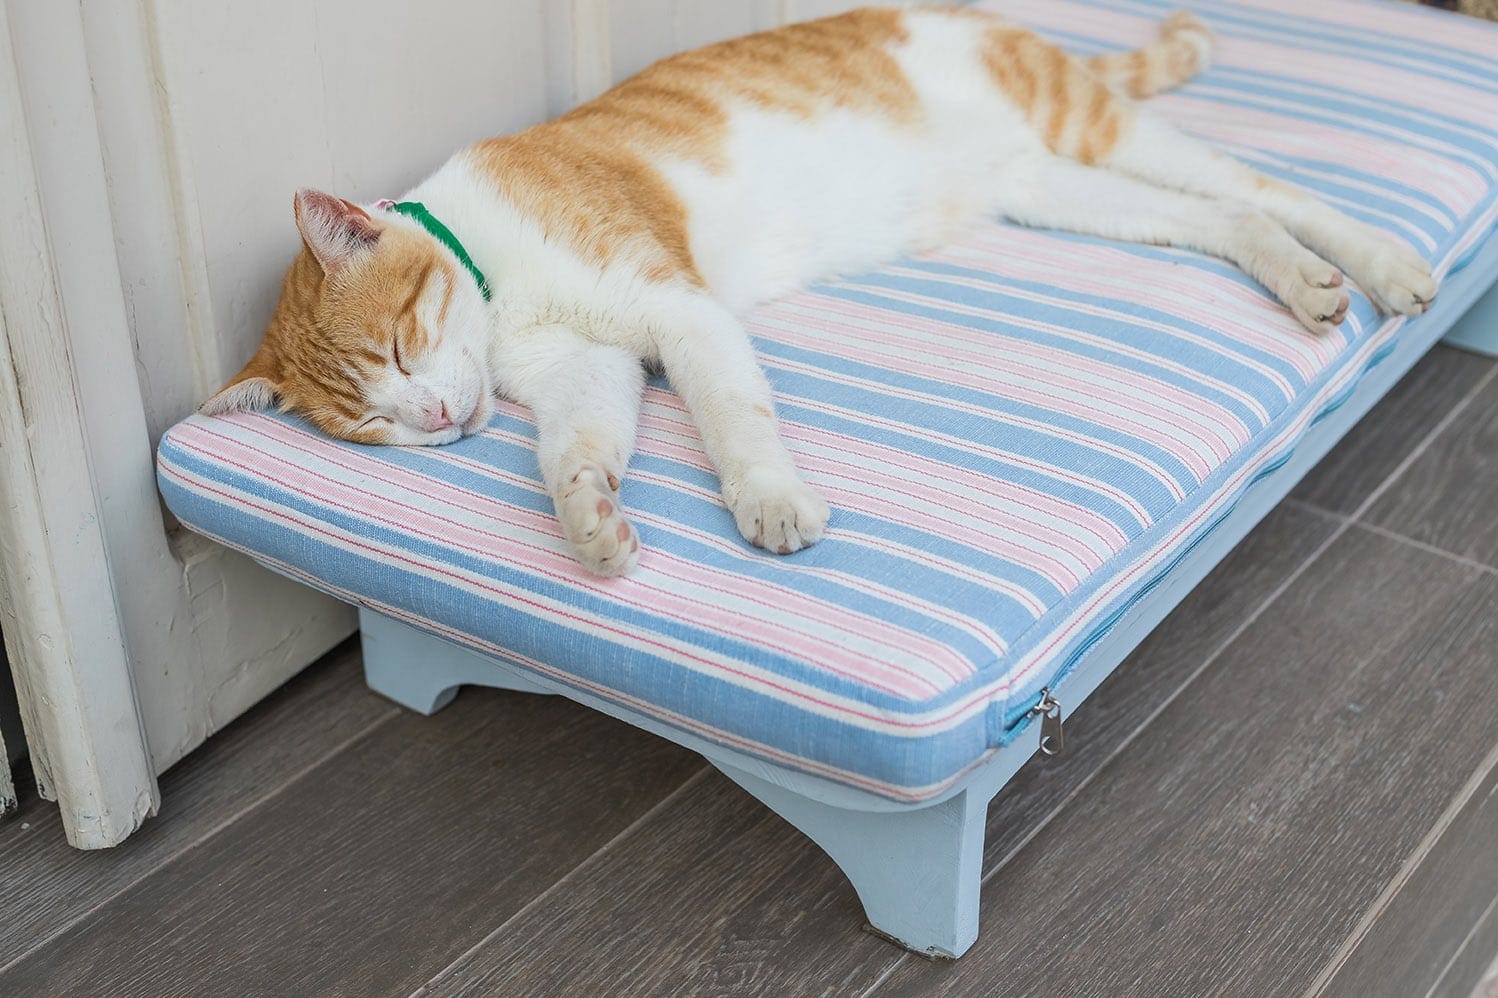 cat sleeping in bed outdoor_Yulia YasPe, Shutterstock